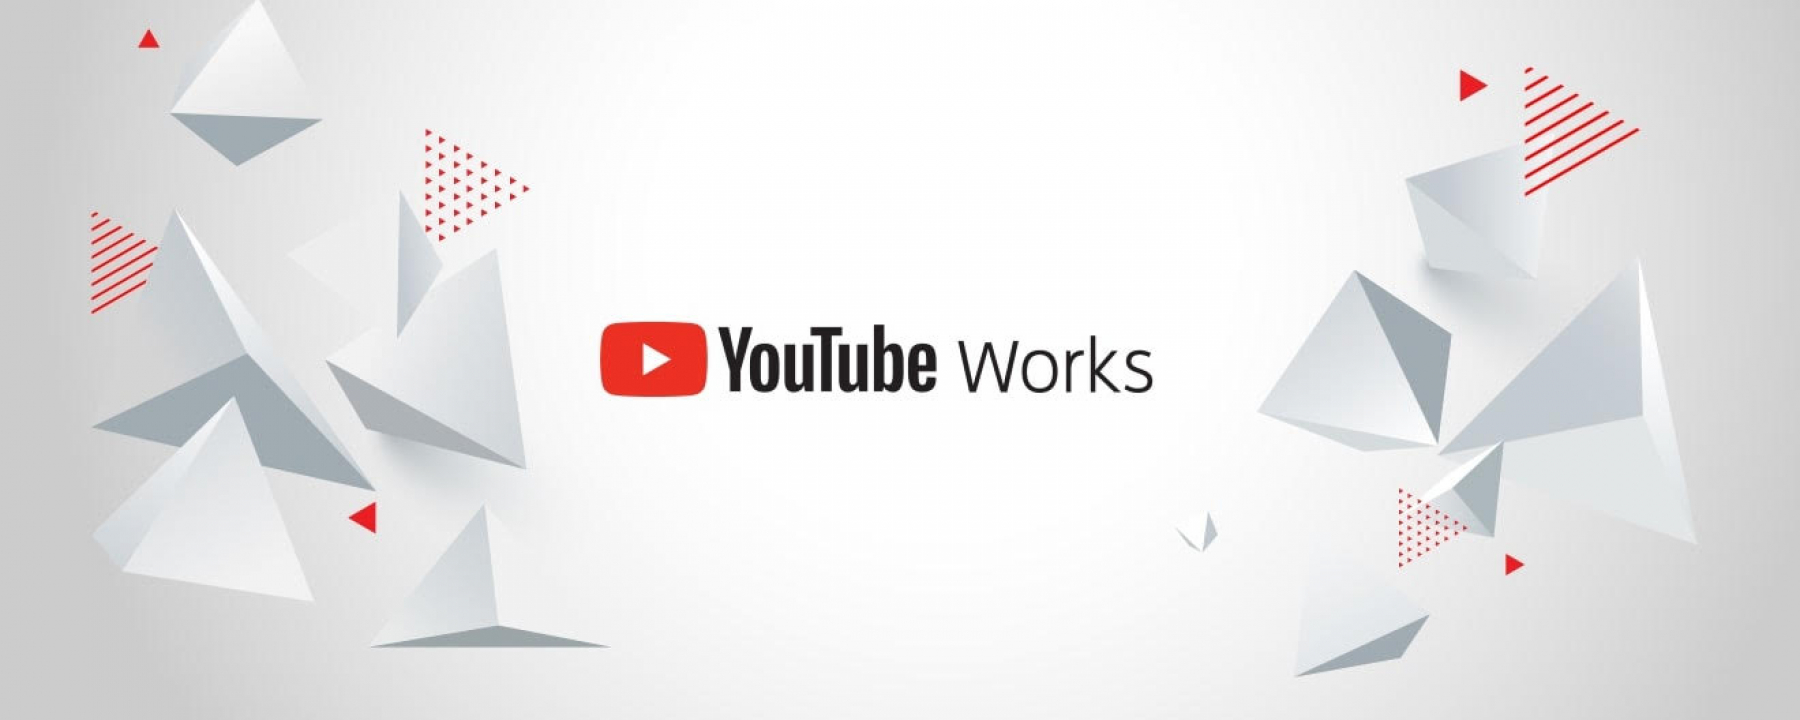 Youtube Works 2019